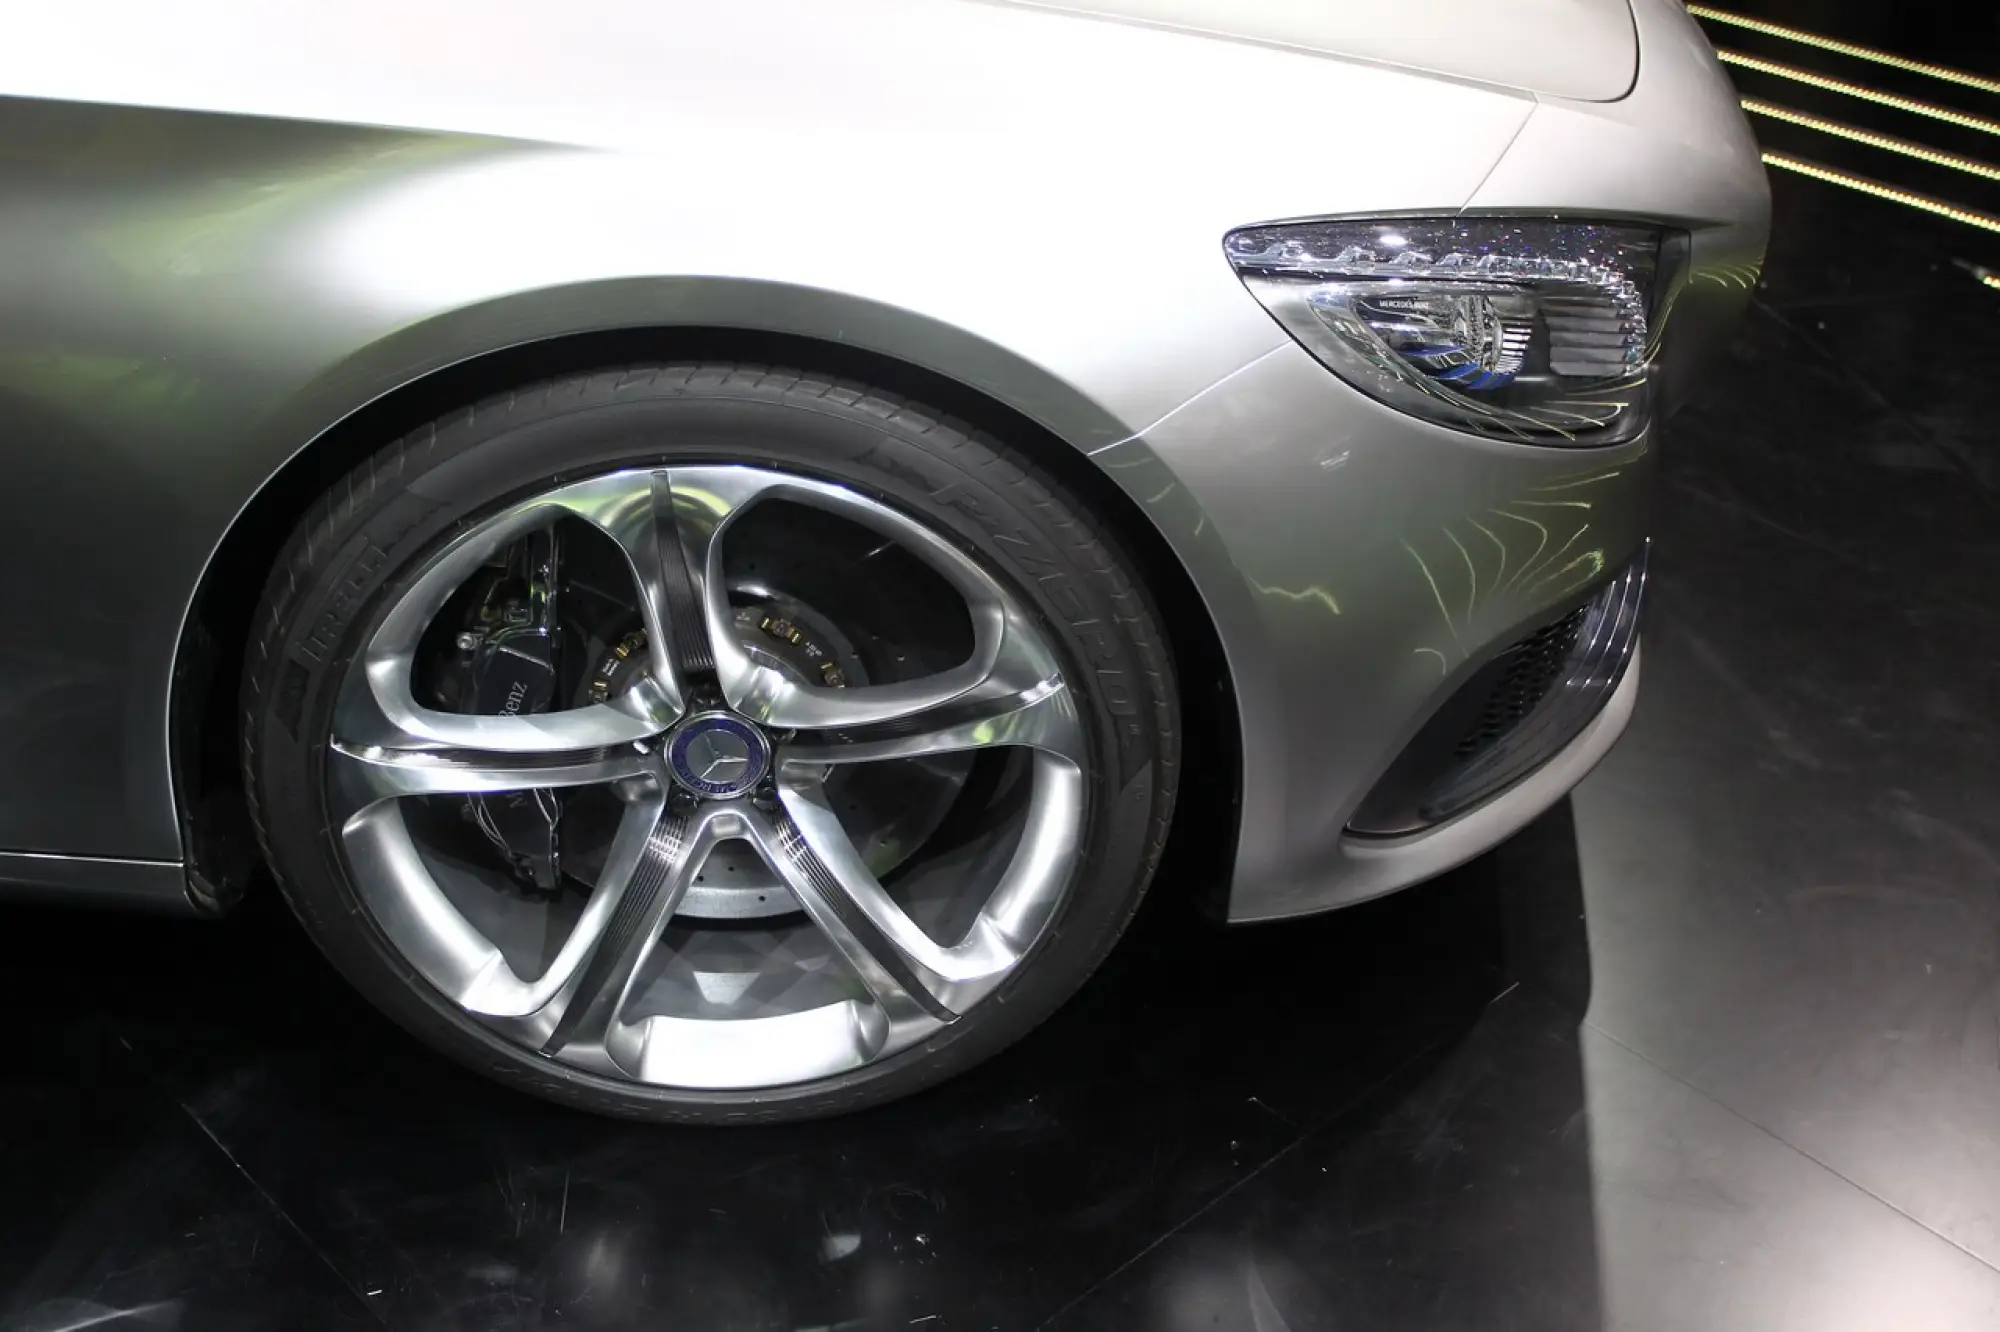 Mercedes-Benz Classe S Coupè Concept - Salone di Francoforte 2013 - 10